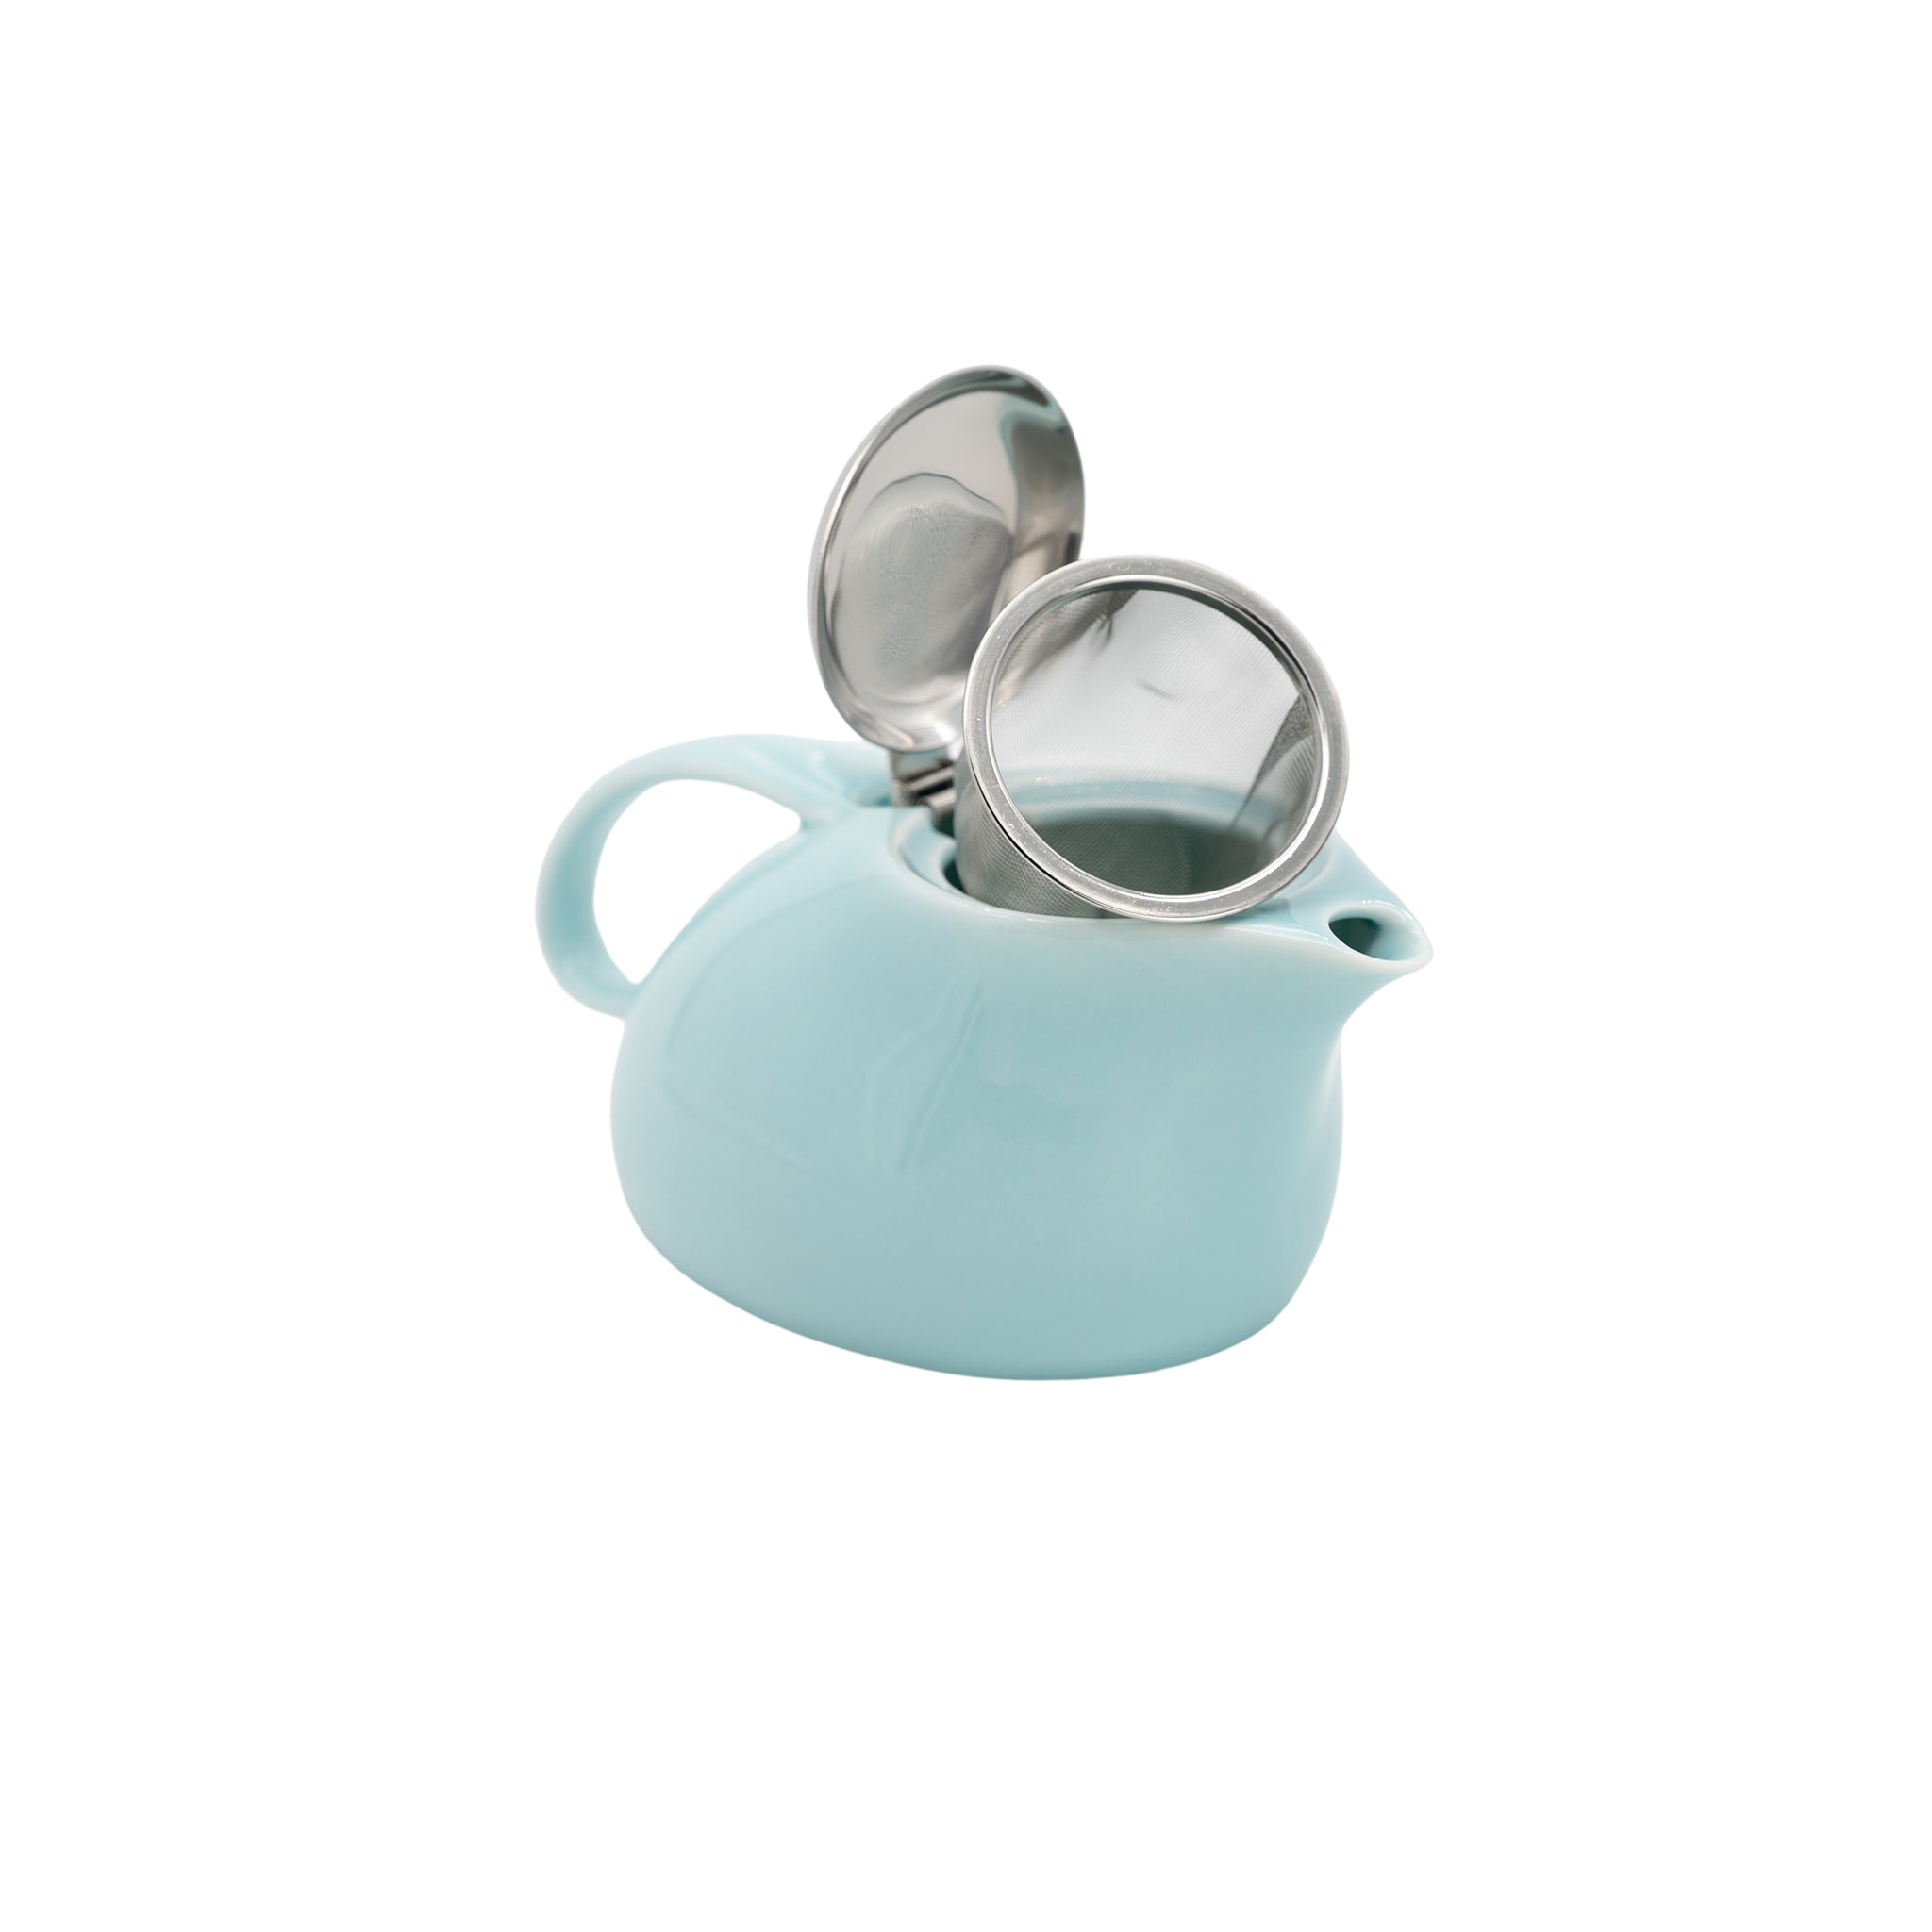 Tea Pot Set (Blue) with Organic Oolong Green Tea